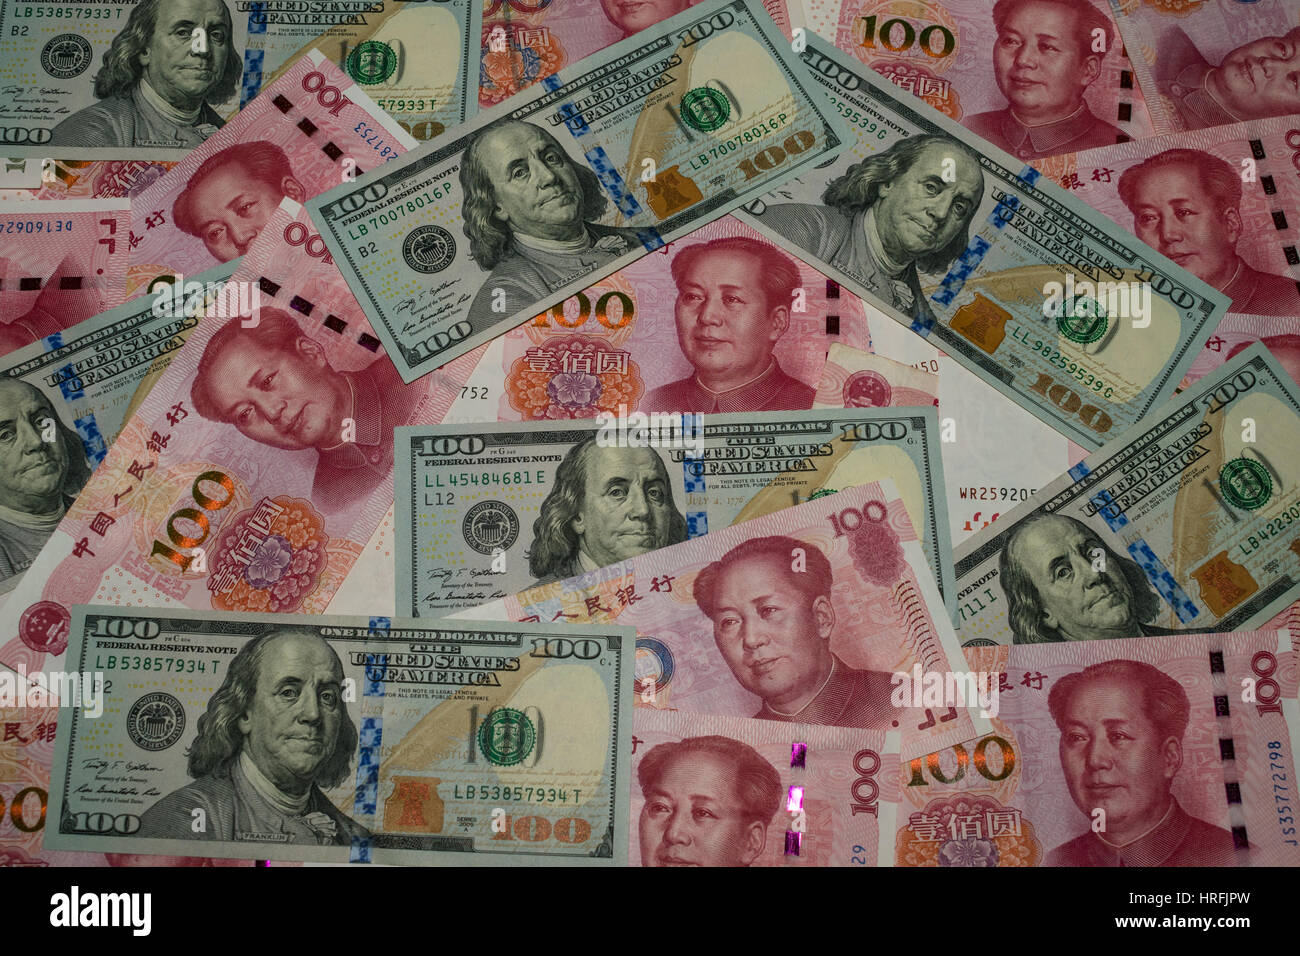 US dollars and Chinese renminbi banknotes (bills) Stock Photo